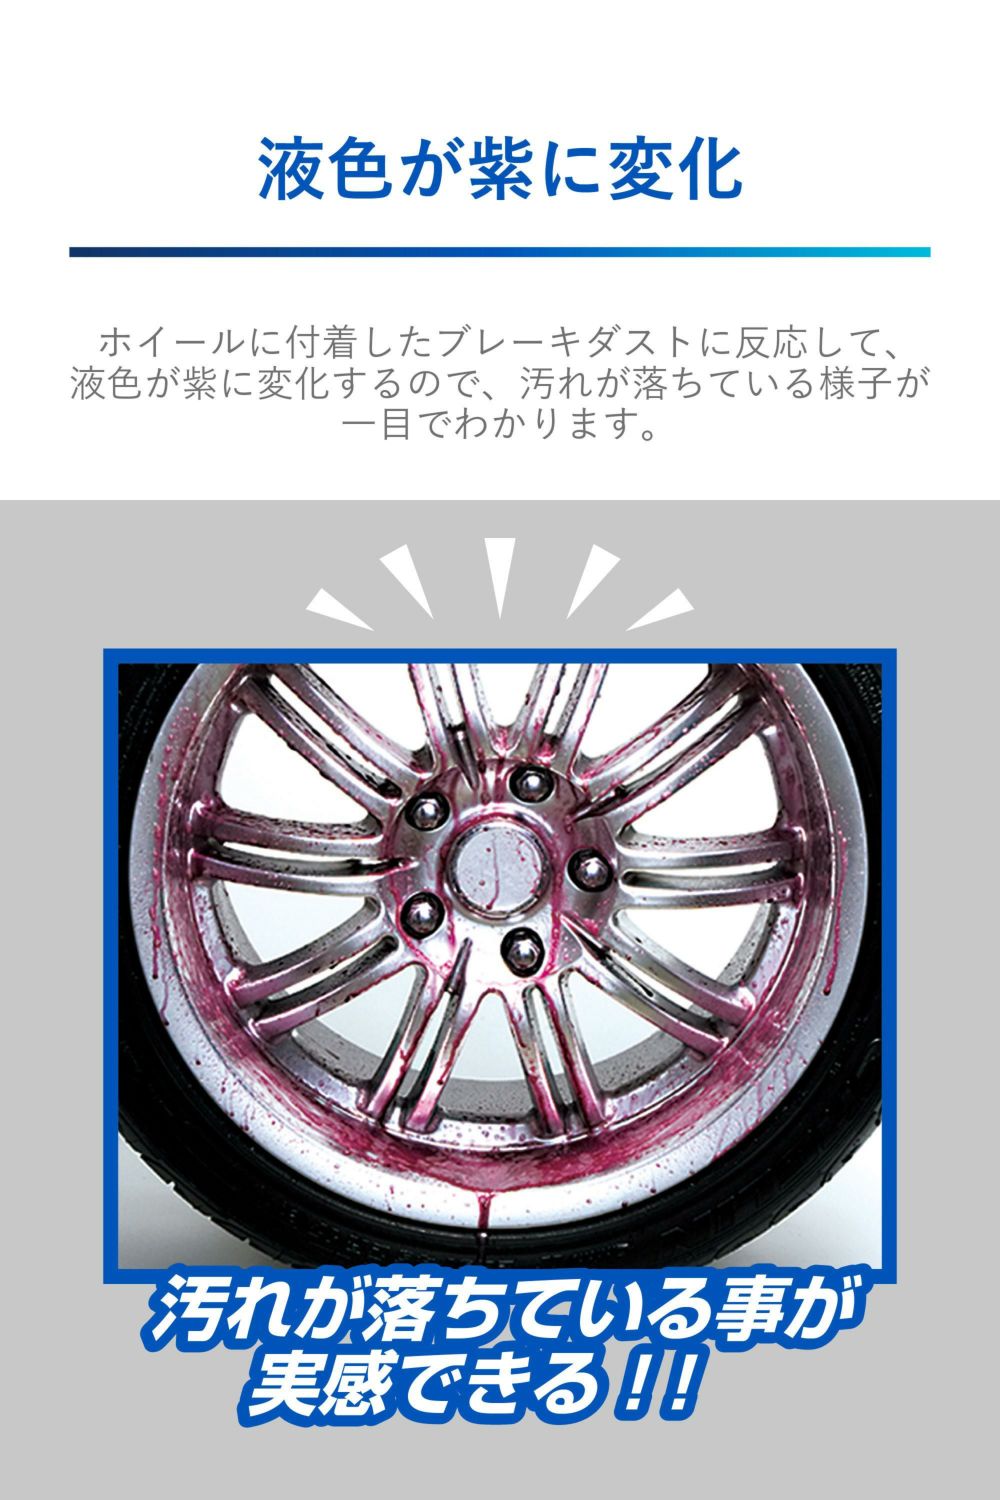 CARMATE Wheel Cleaner/Brake Dust Cleaner - Car Washing Supply